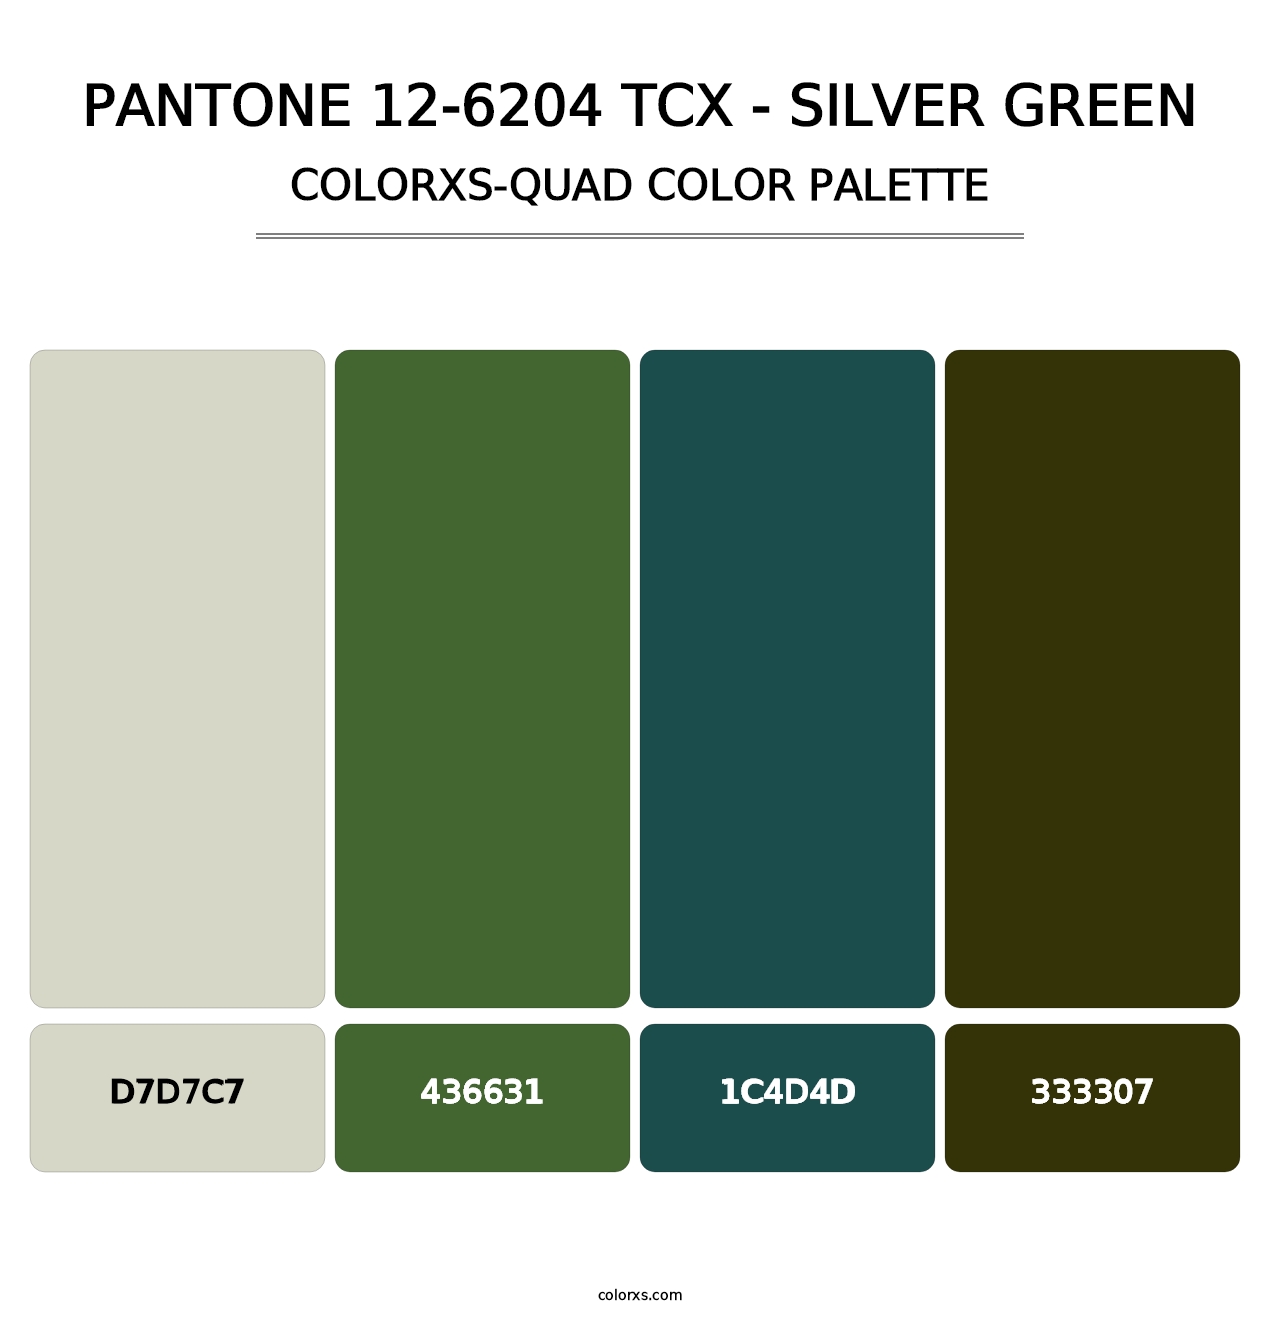 PANTONE 12-6204 TCX - Silver Green - Colorxs Quad Palette